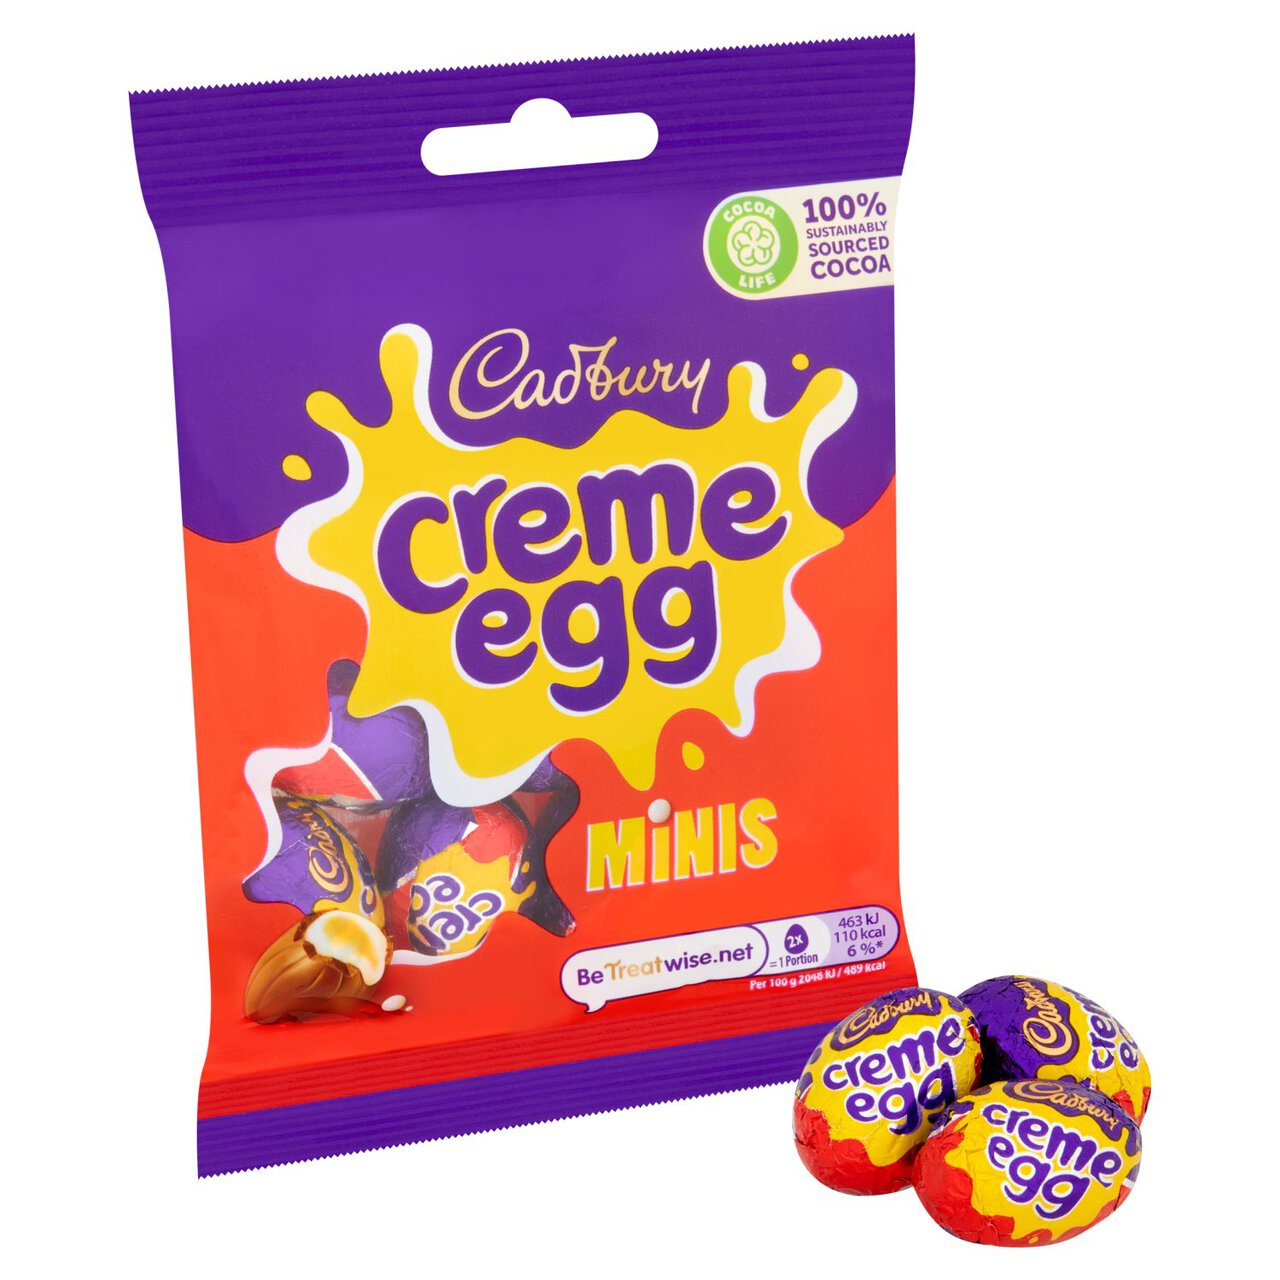 Cadbury Creme Eggs Mini Chocolate Bag 78g